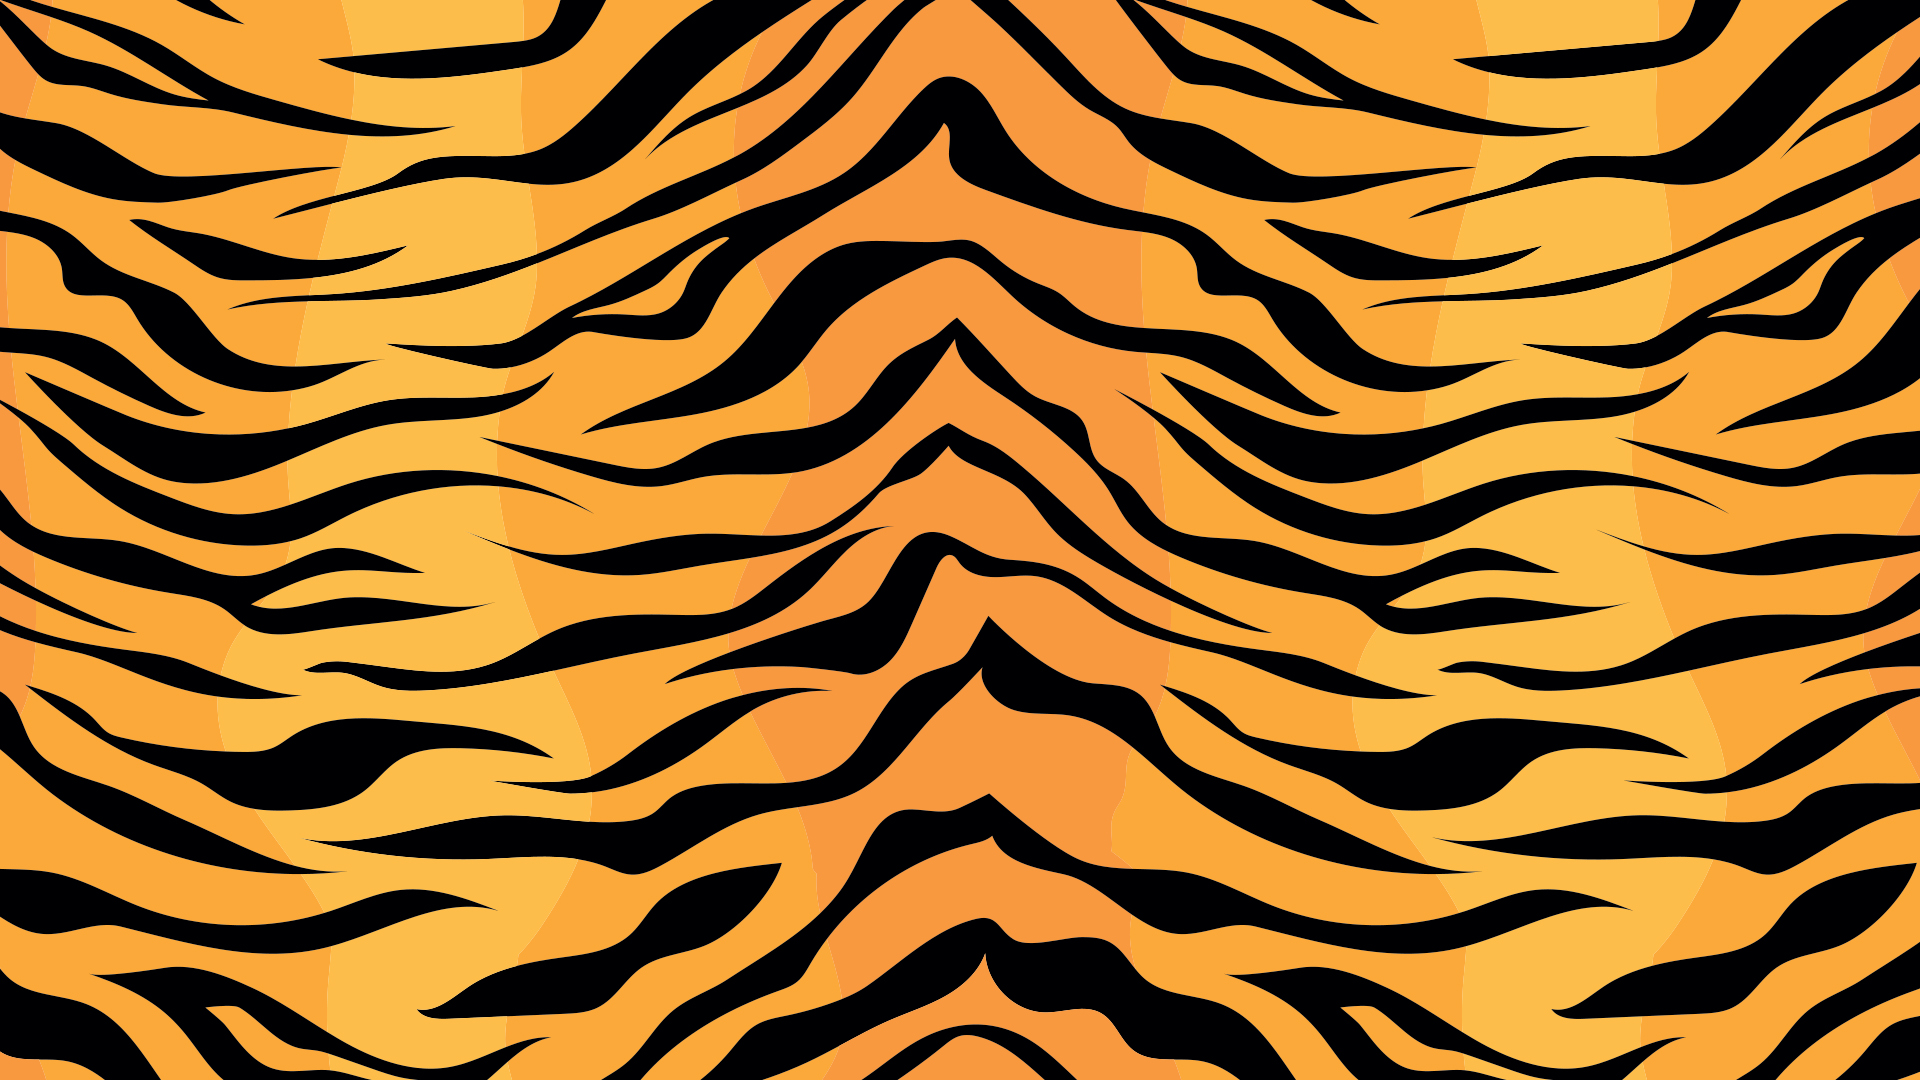 Tiger stripes